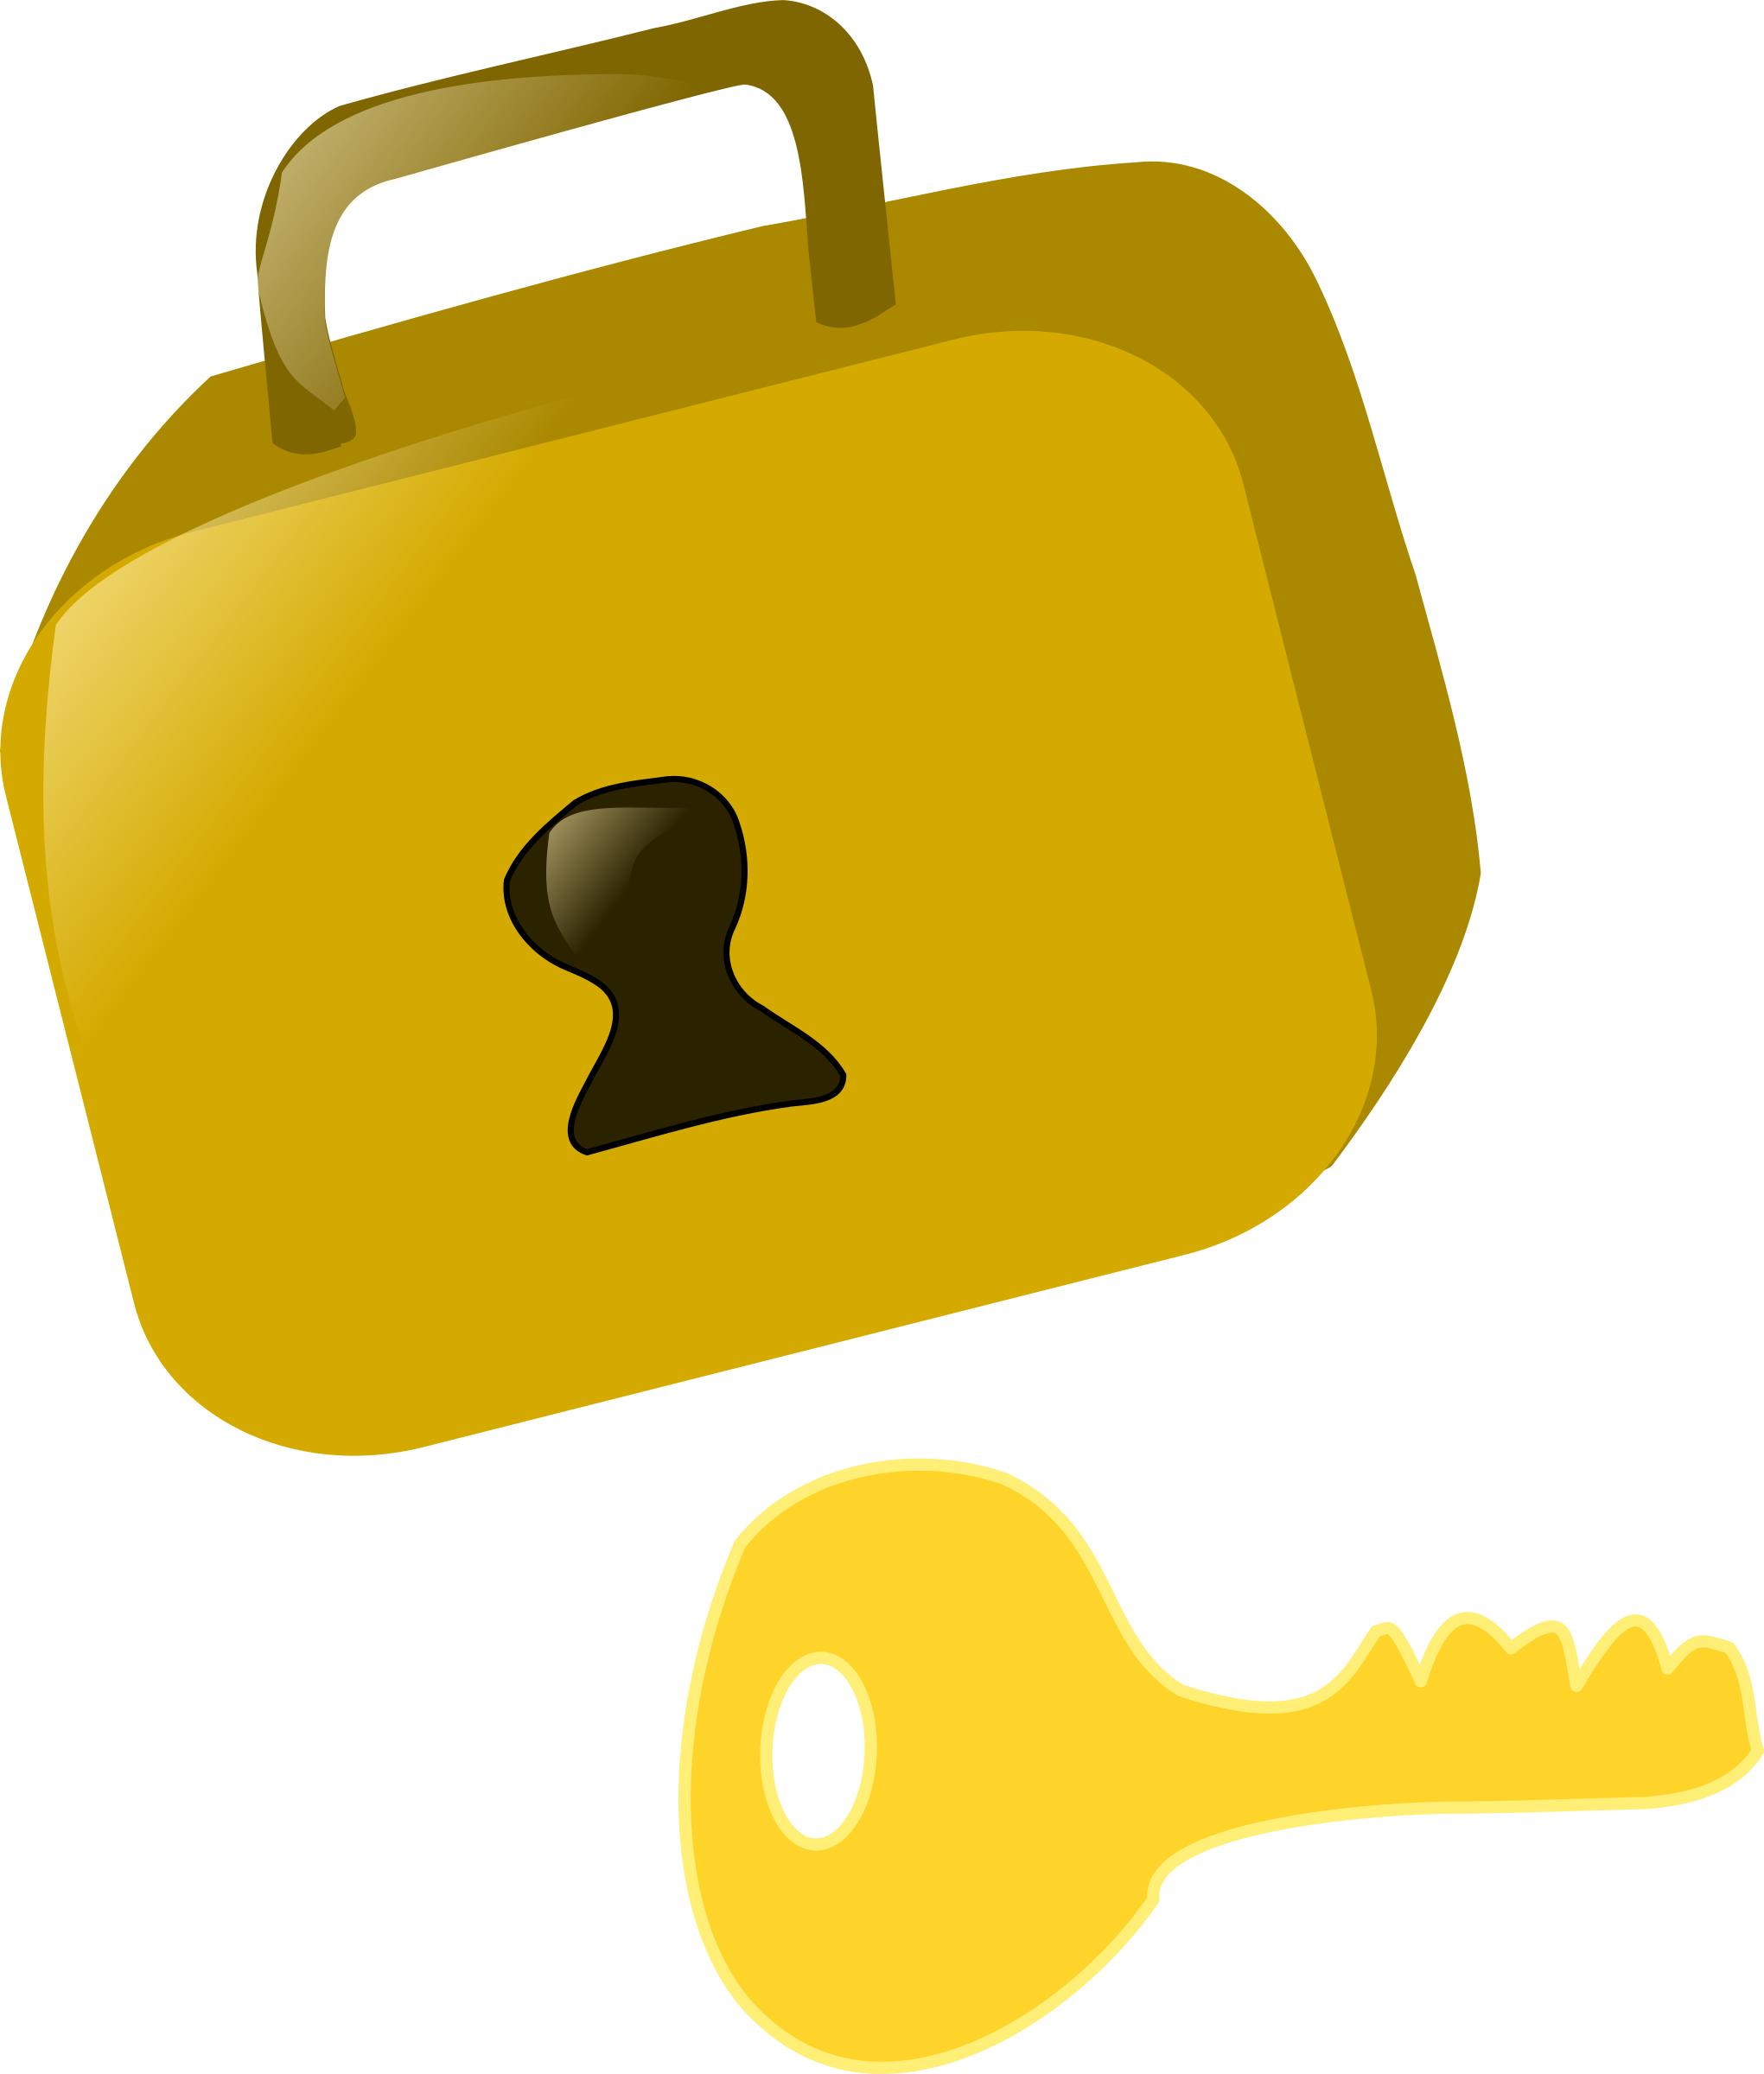 Lock and Key SVG Clip arts